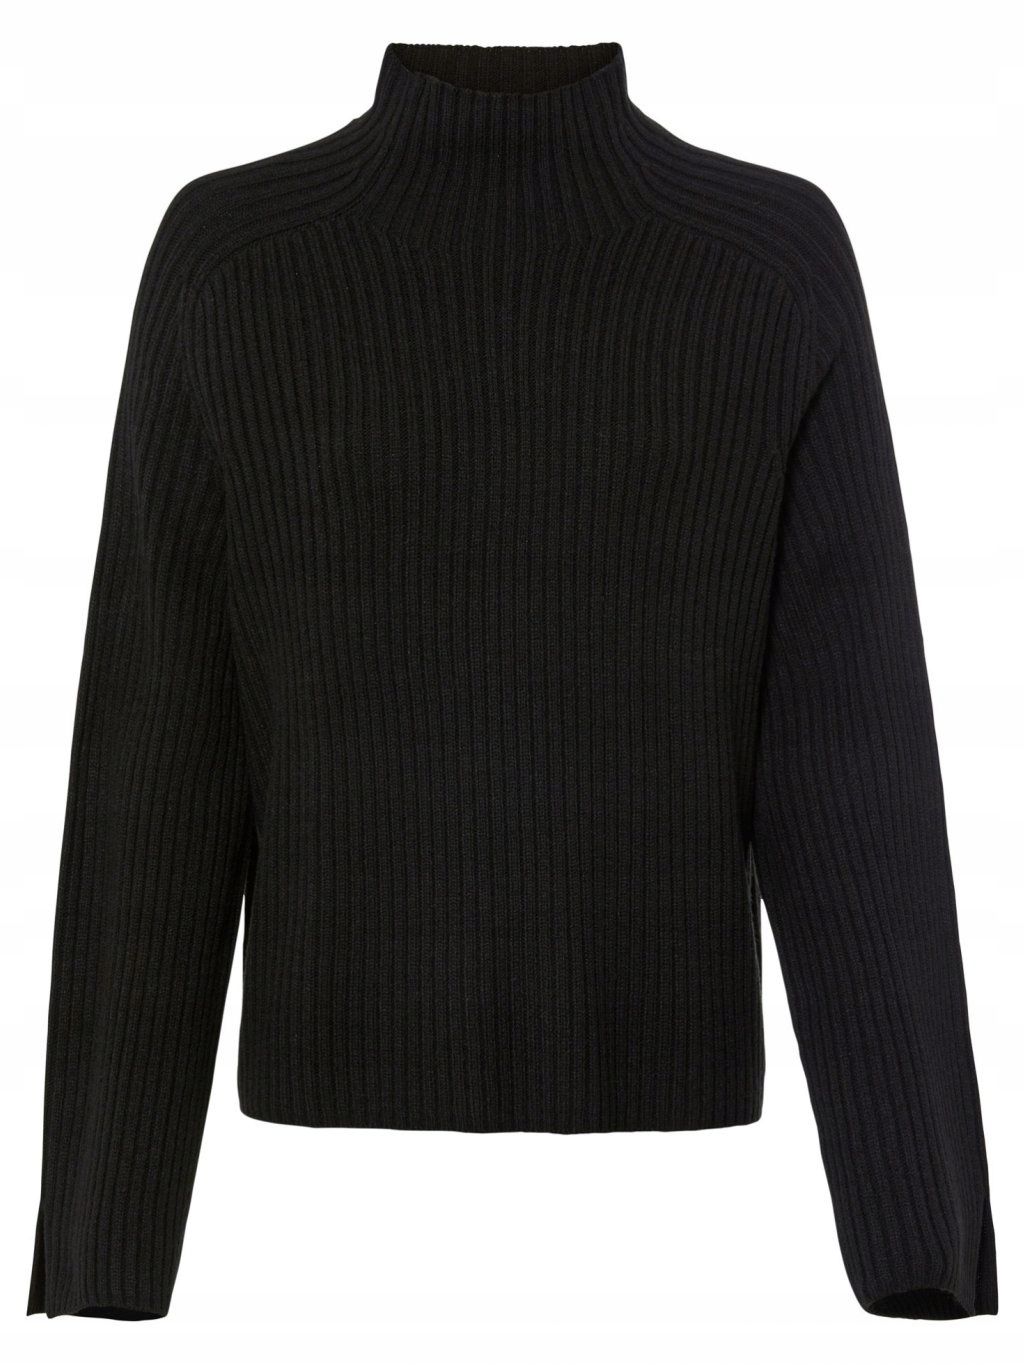 B.P.C czarny sweter ze stójką oversize ^40/42